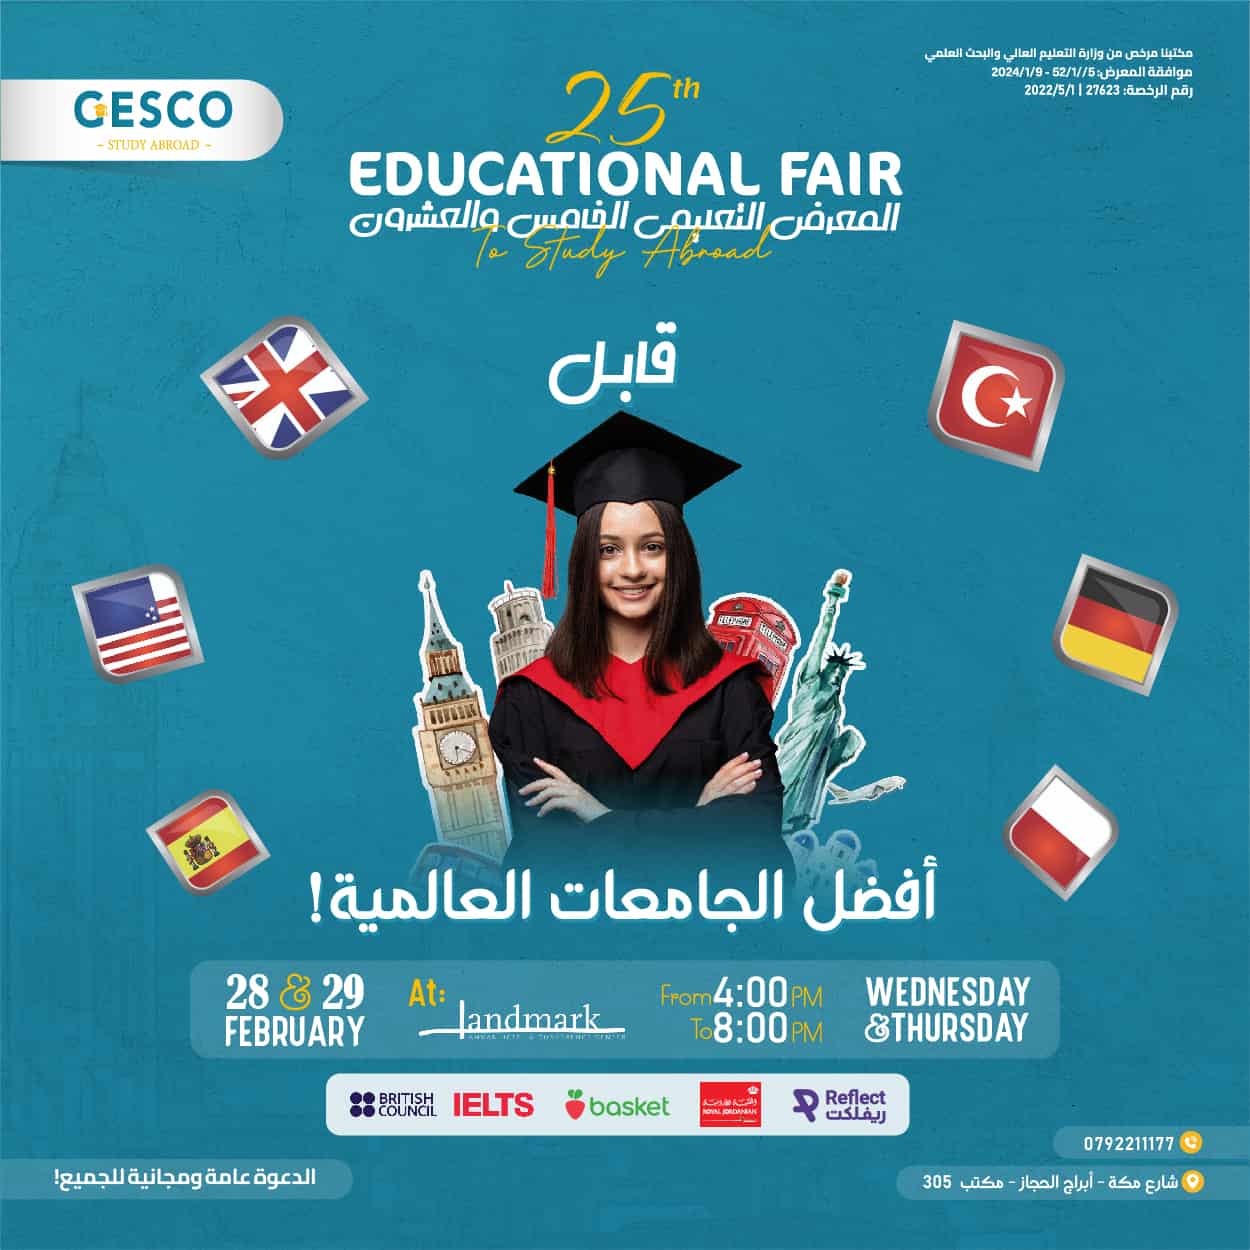 GESCO’s 25th Educational Fair in Jordan